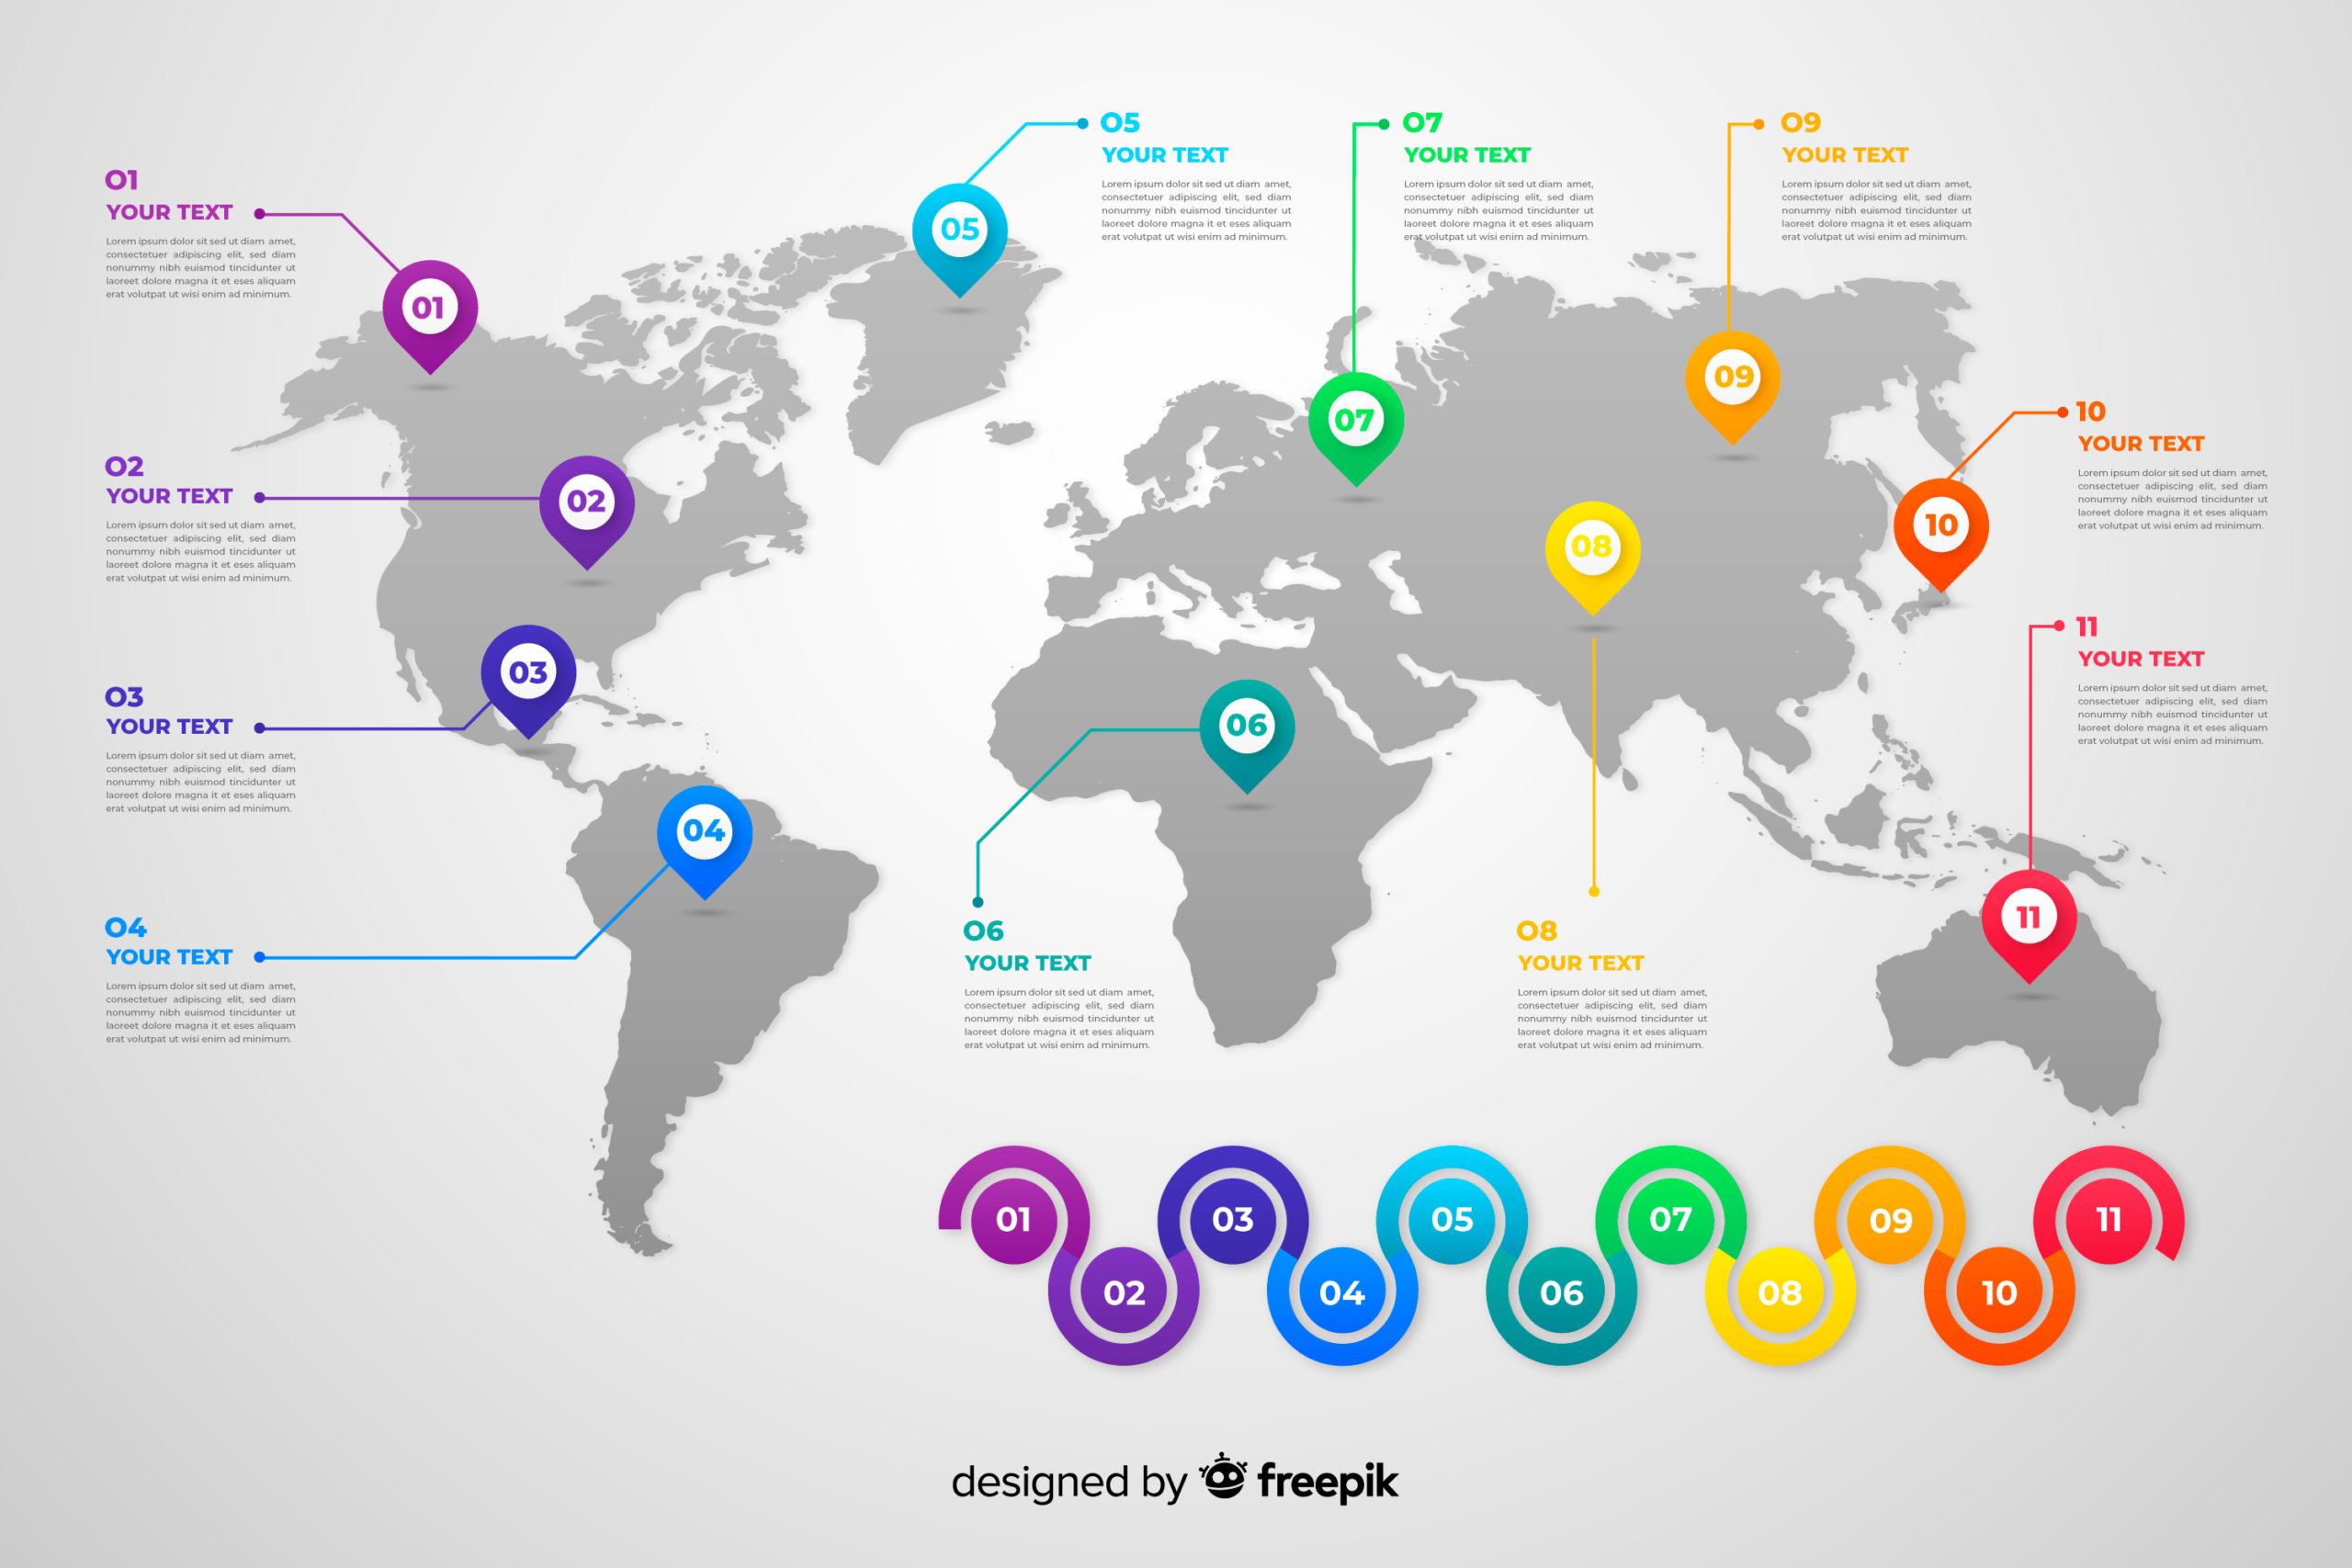 world map infographics